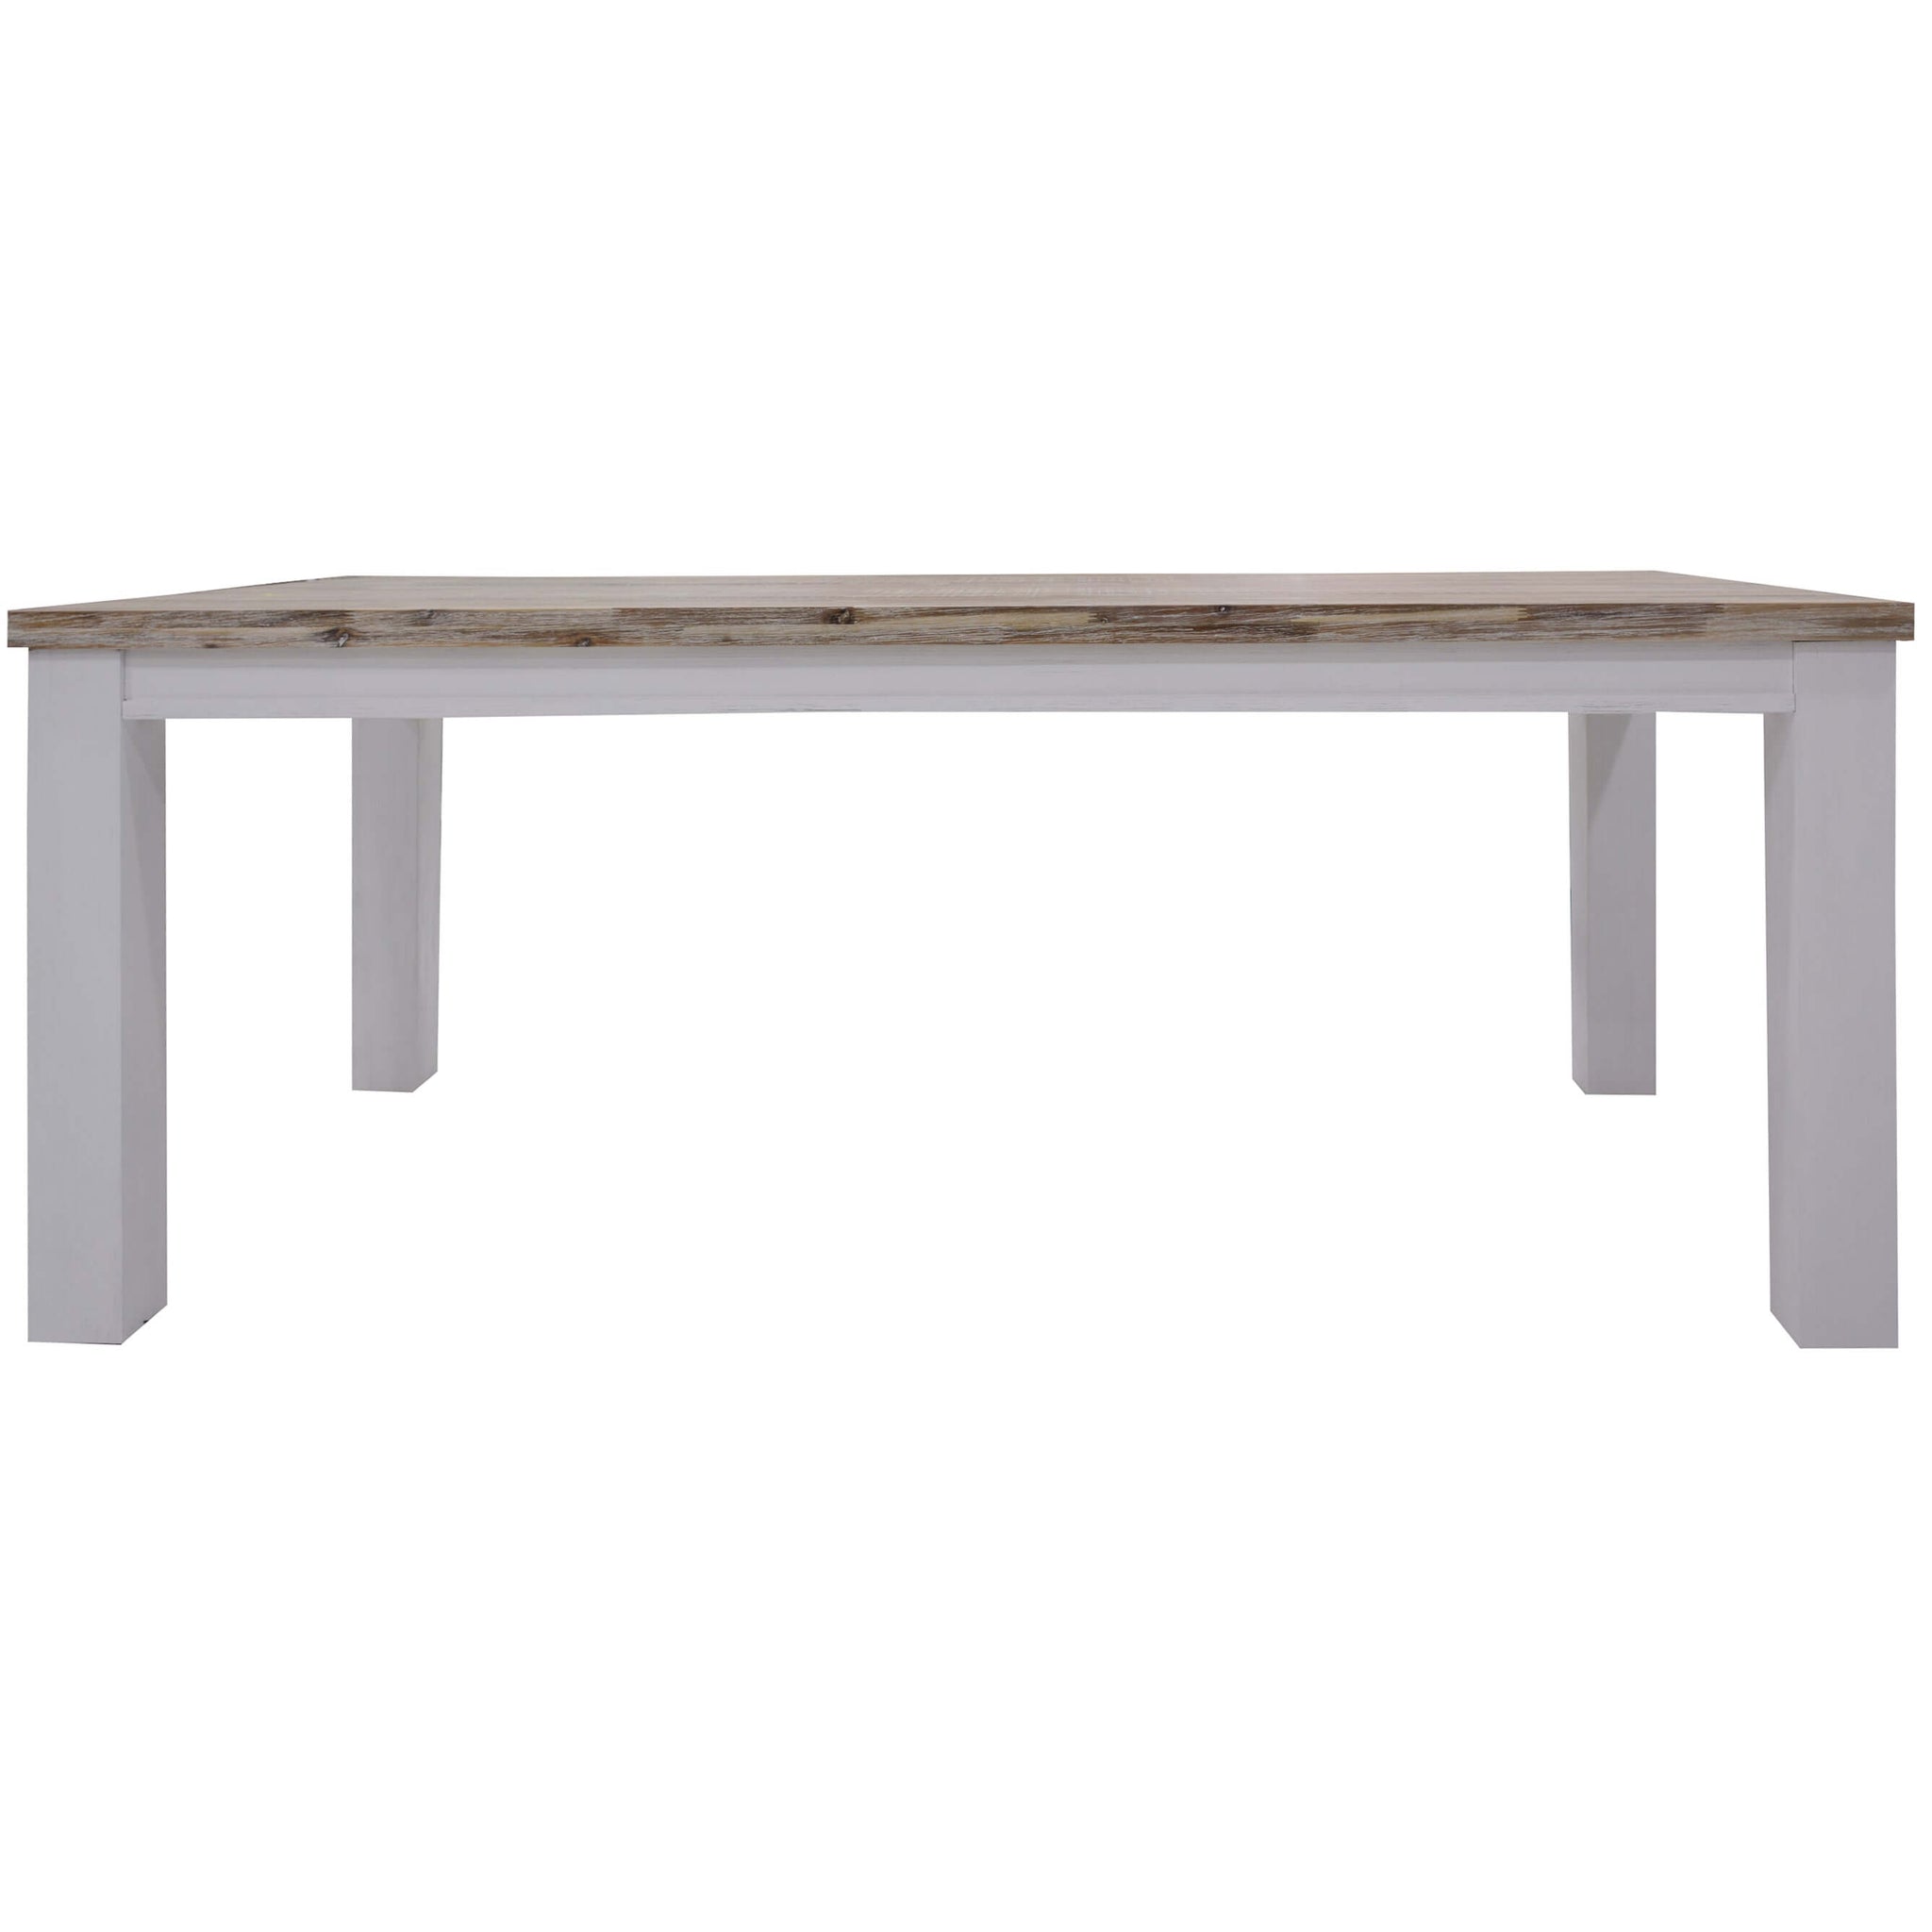 Plumeria Dining Table 225cm Solid Acacia Wood Home Dinner Furniture -White Brush-Upinteriors